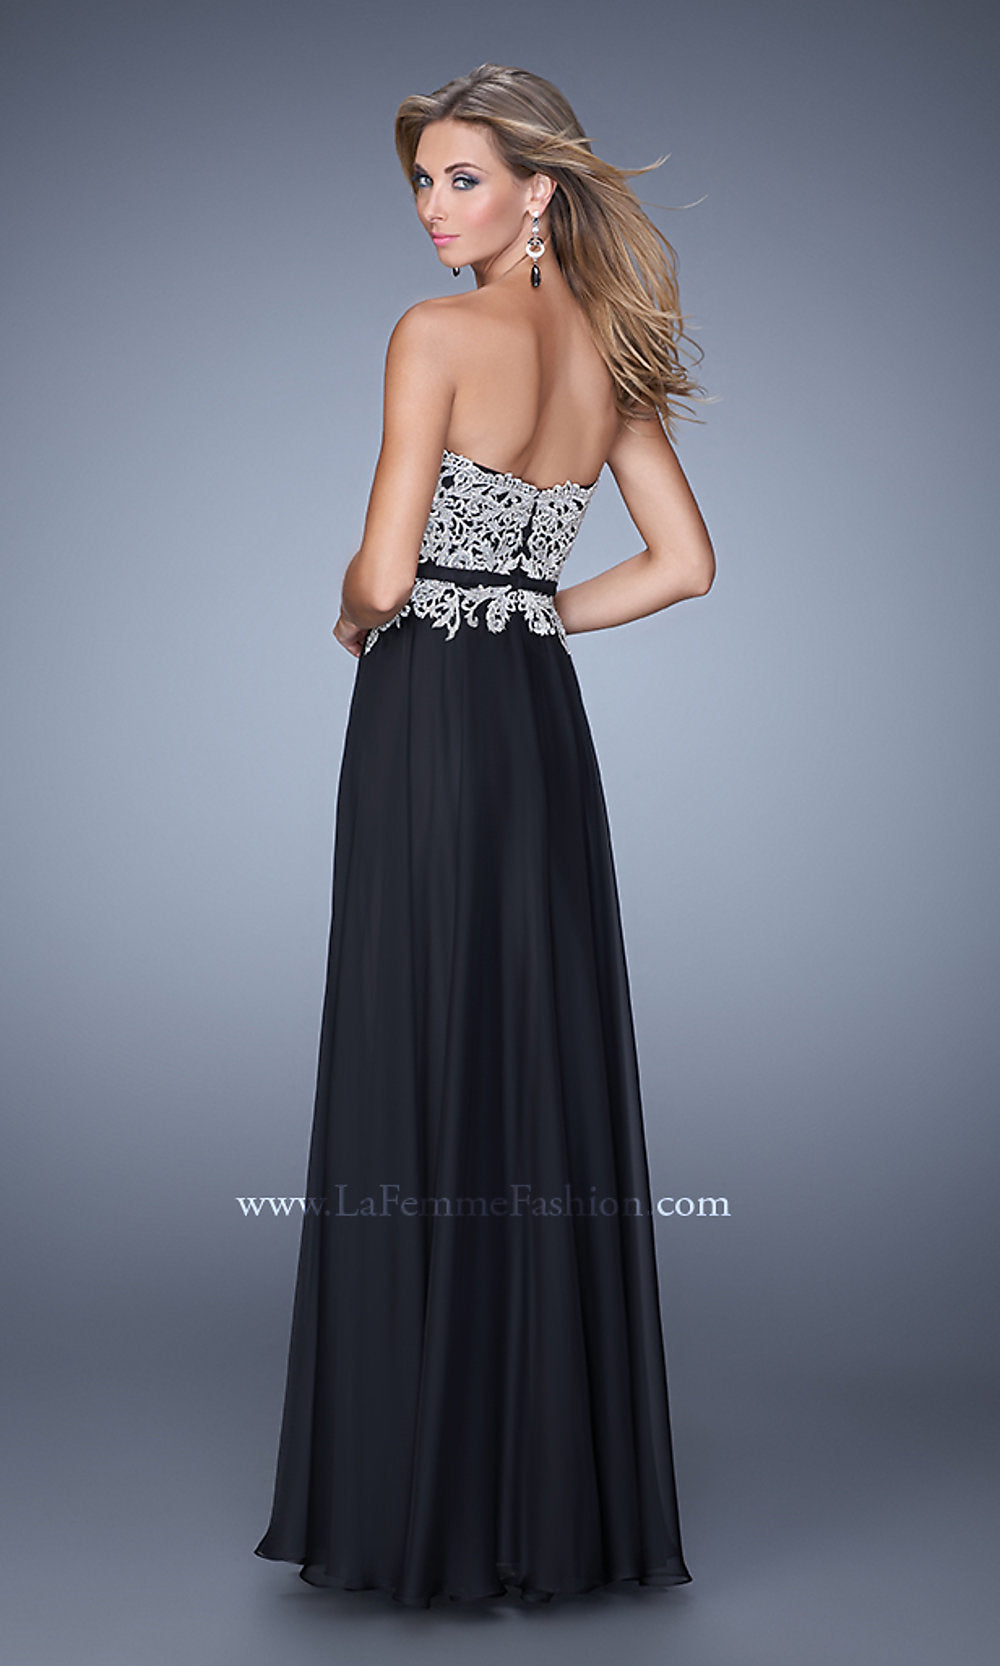  Elegant Black Strapless Evening Gown by La Femme